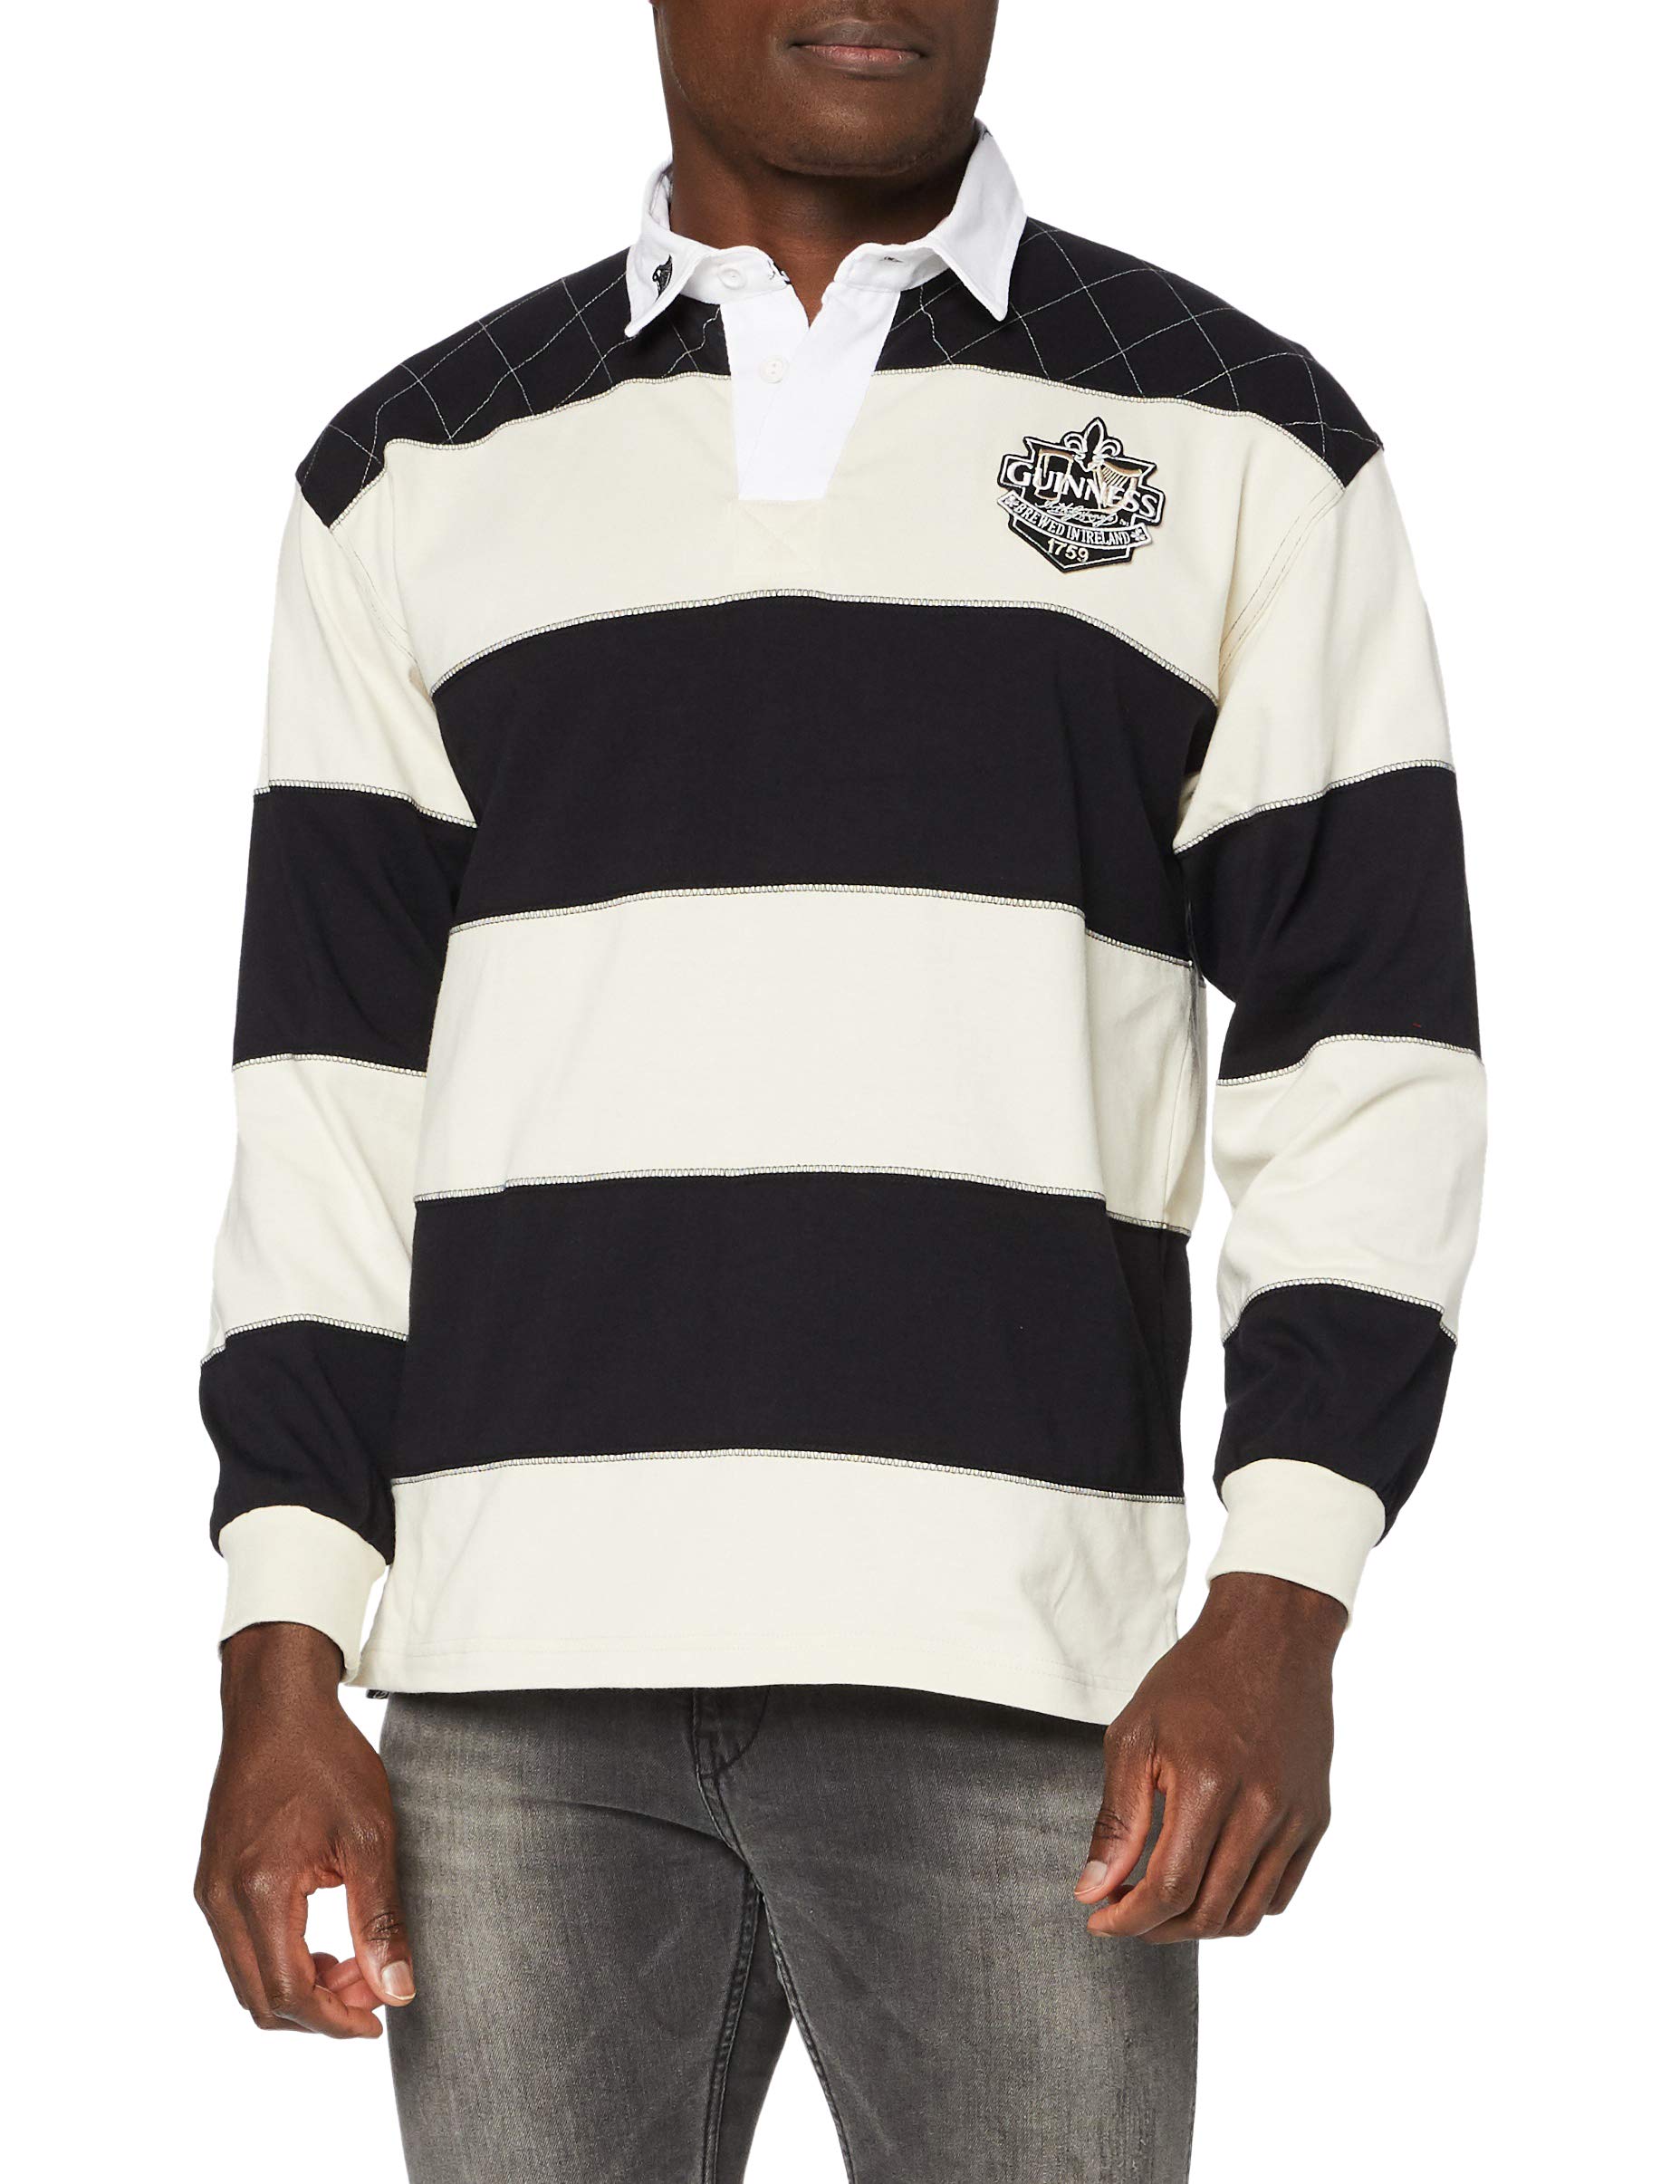 Guinness Official Merchandise Herren Shirt , Knopfleiste - Multicolored - Black/Cream - Größe L